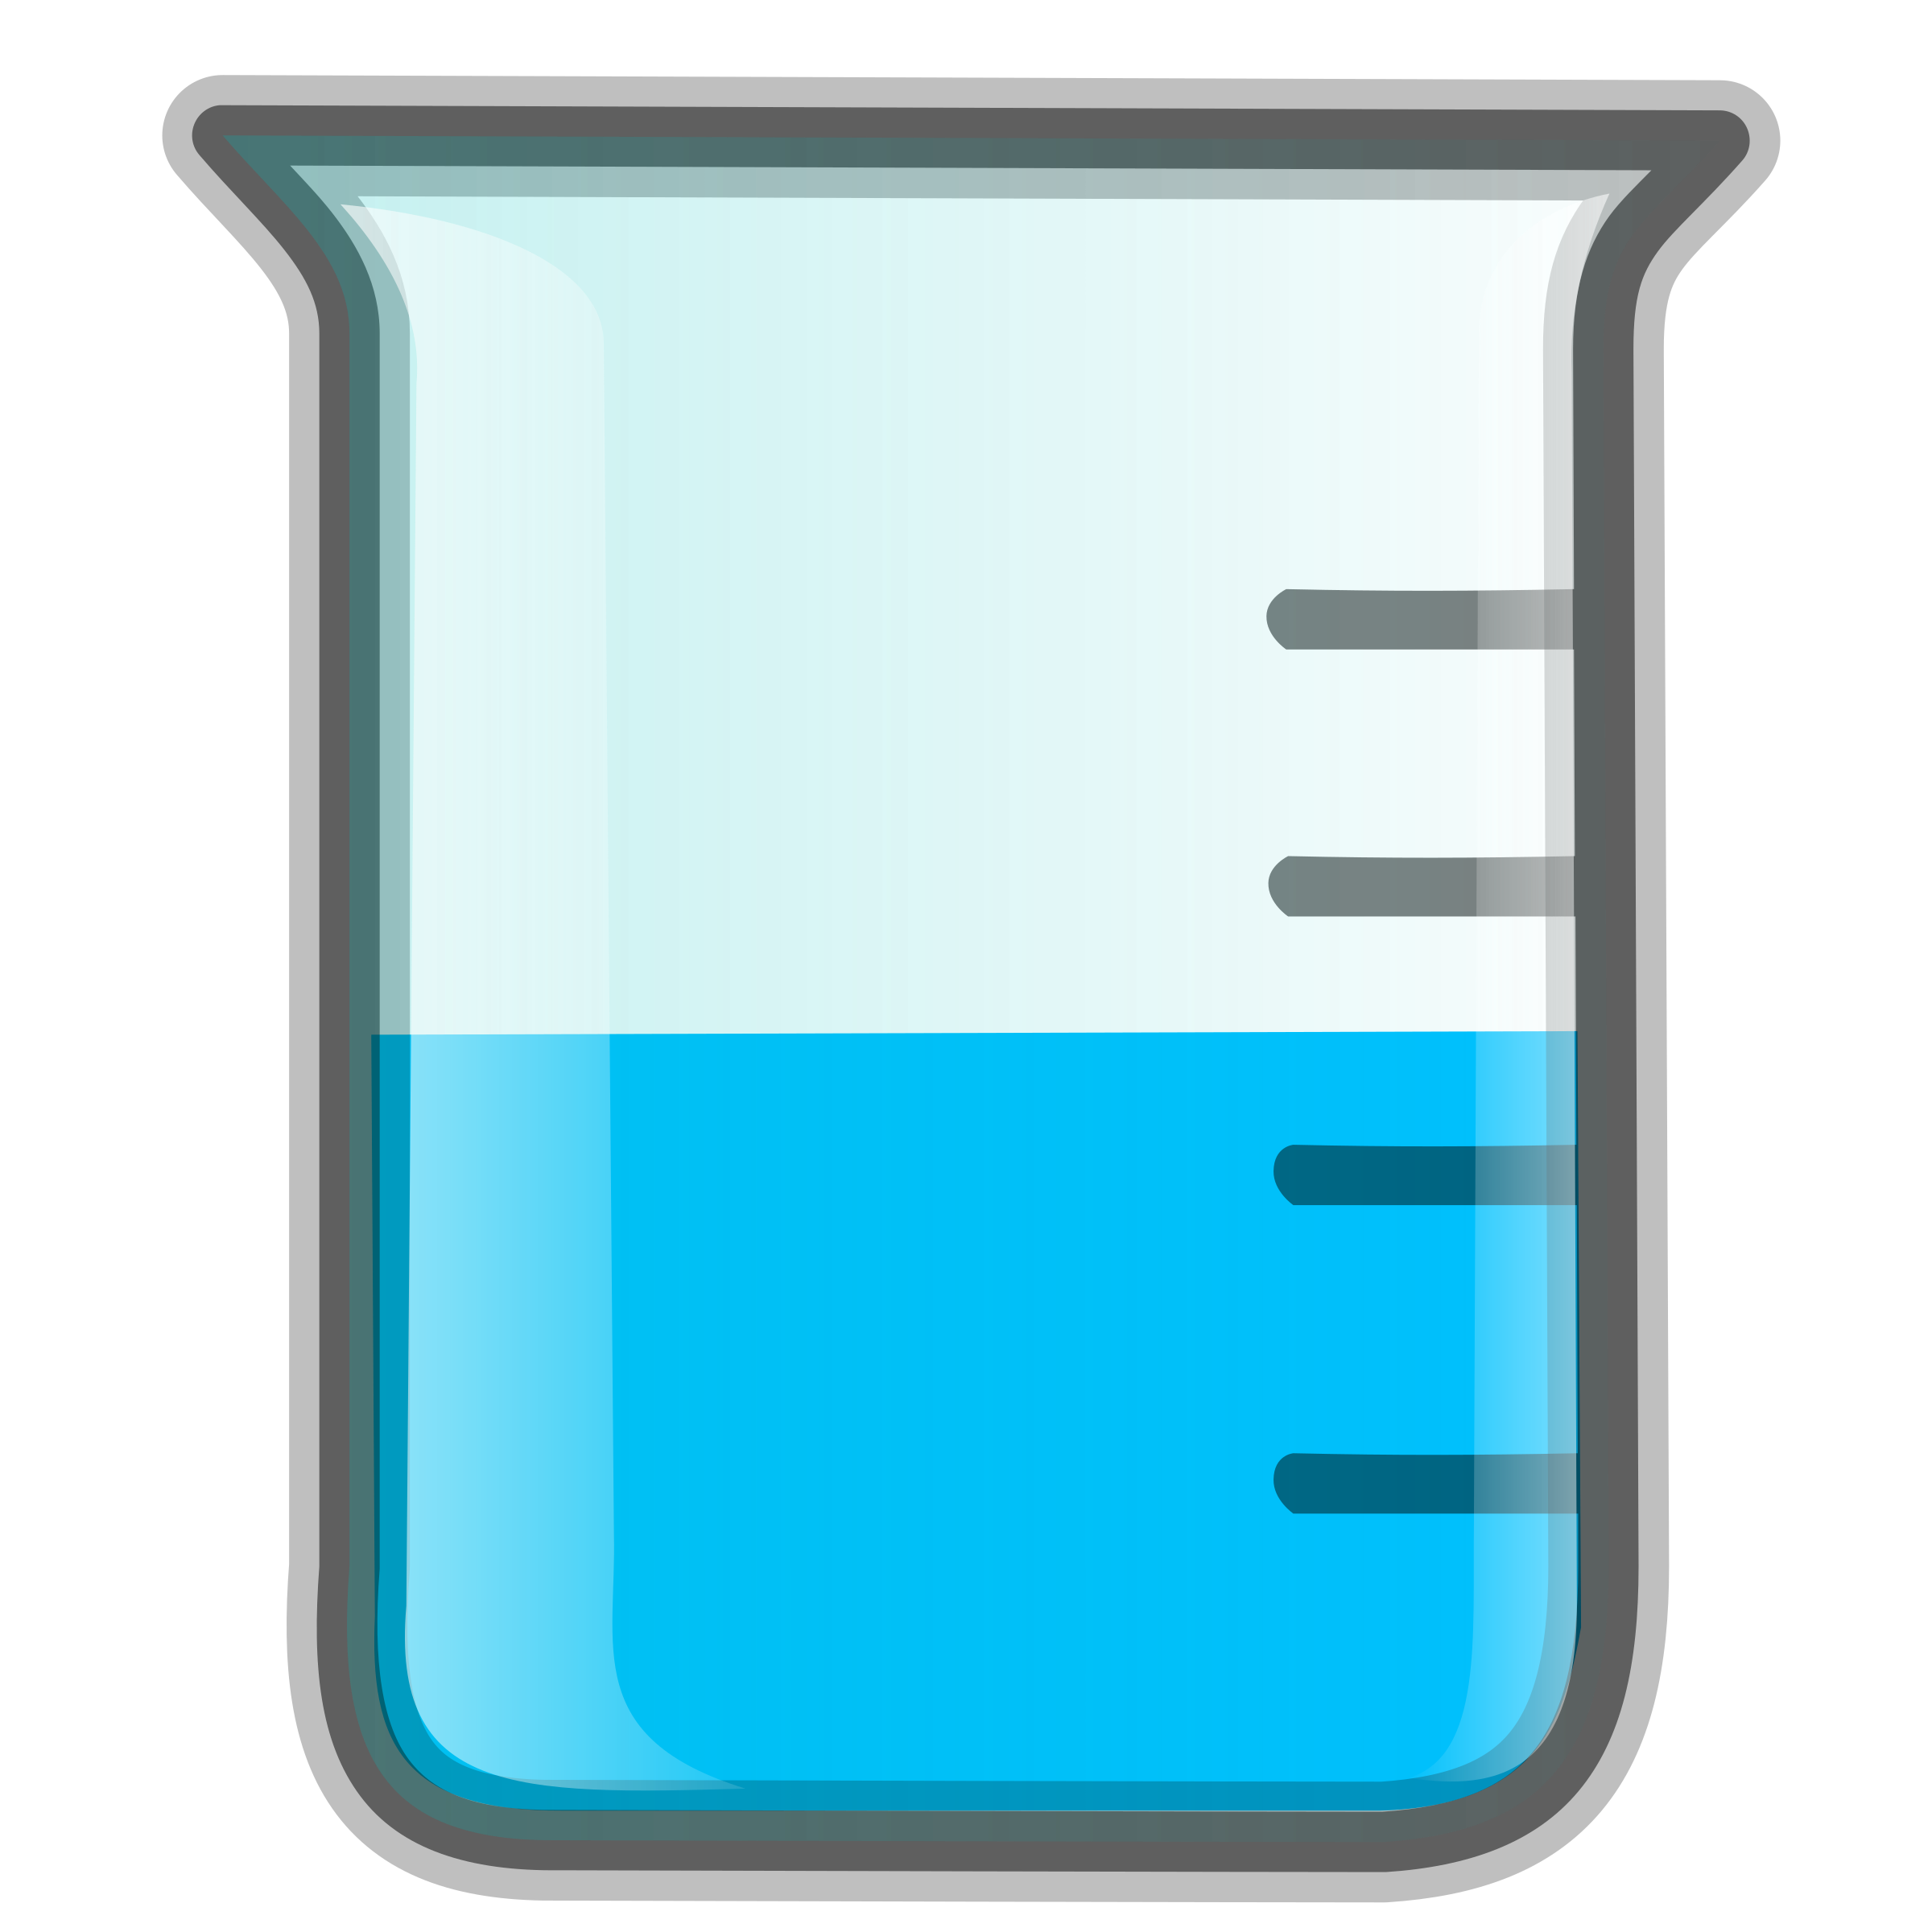 Beaker clipart laboratory beaker. Lab icon big image